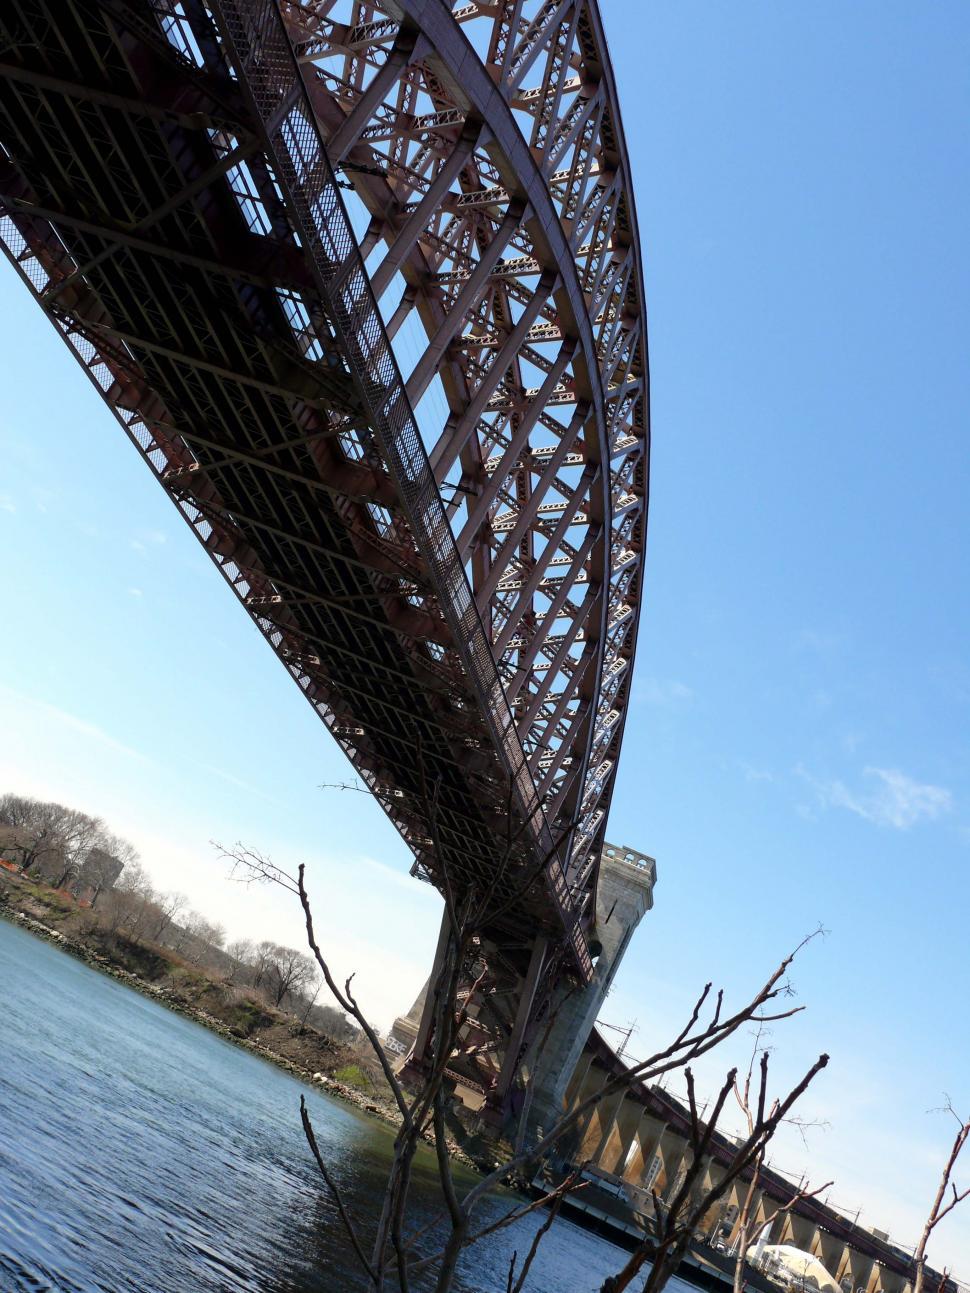 Free Image of Bridge Spanning Over Waterway 